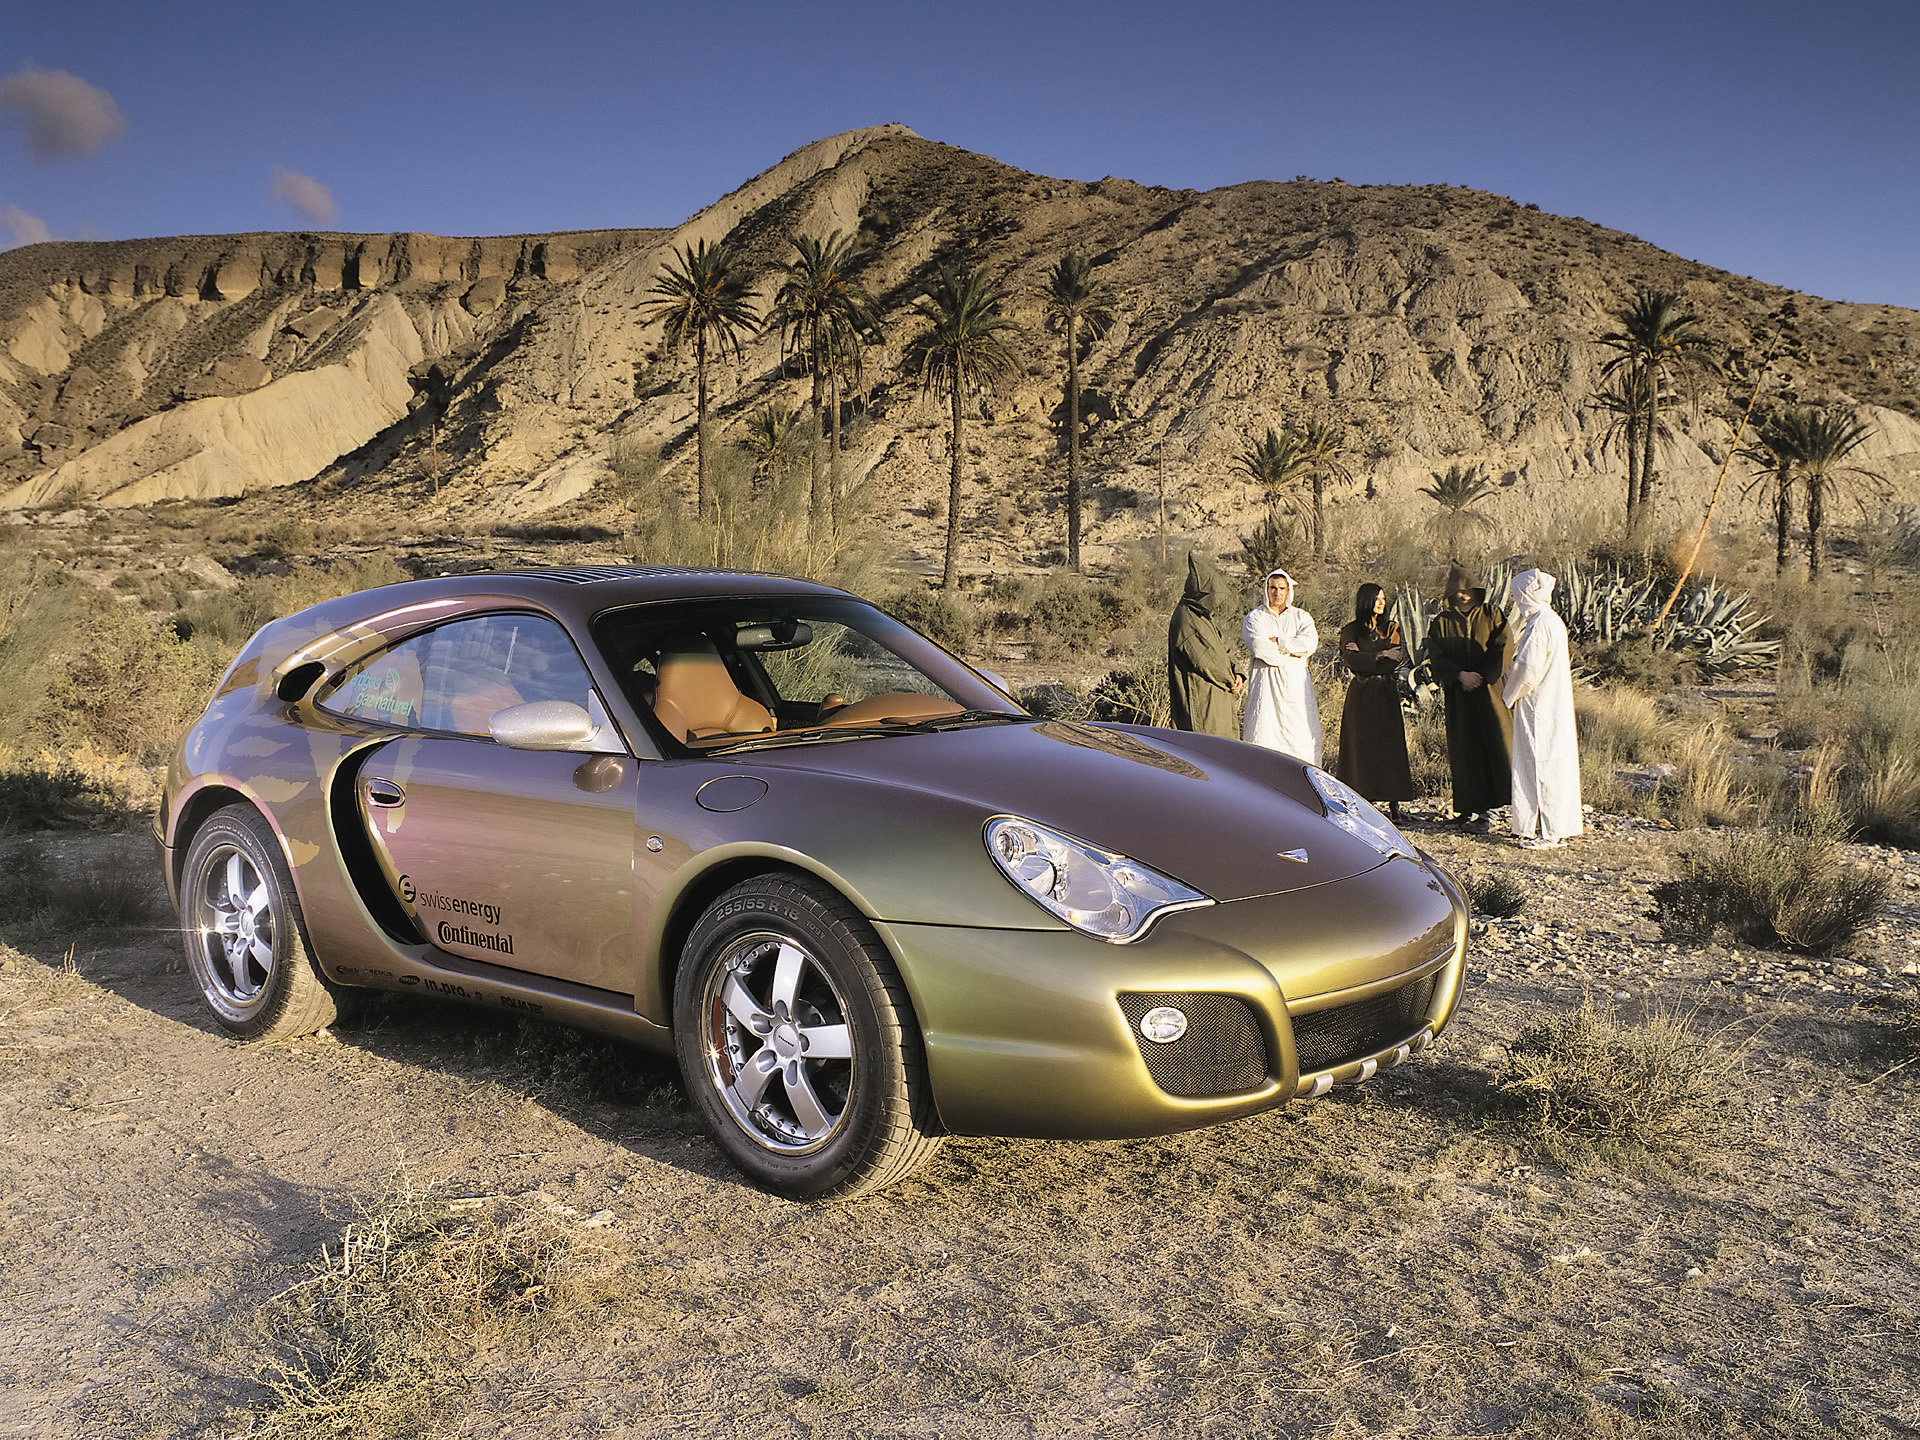 2003, Rinspeed, Porsche, Bedouin, 996, Turbo, Concept, Supercar, Pickup, Truck, He Wallpaper